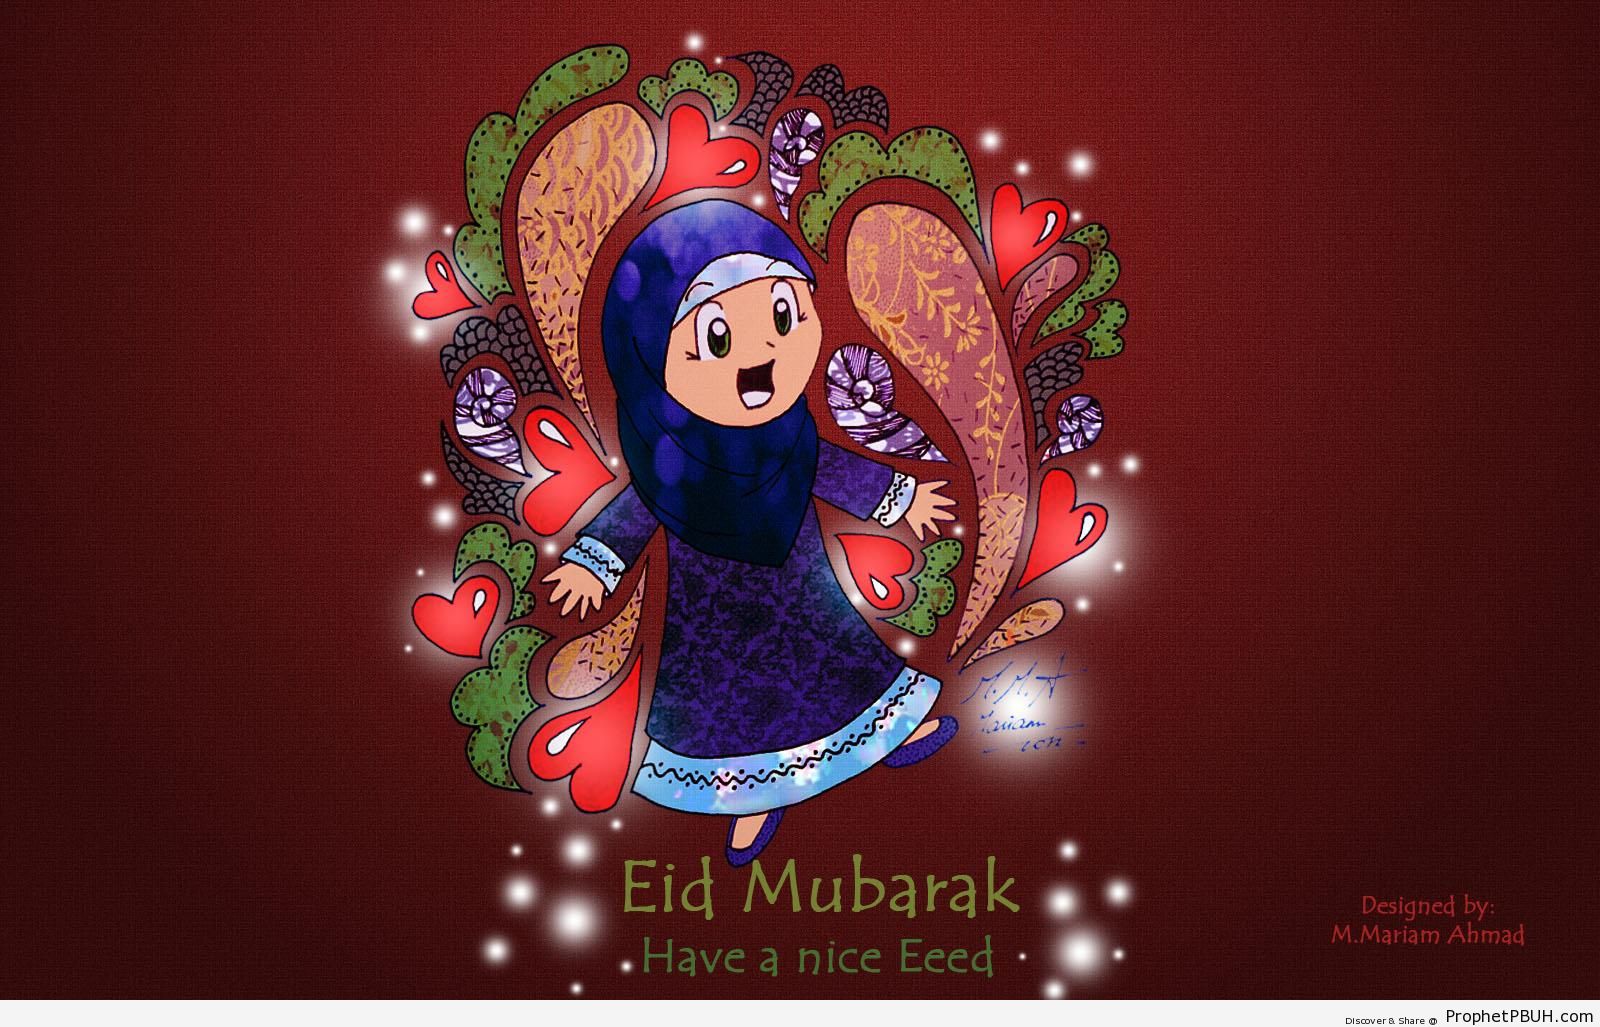 Eid Mubarak with Drawing of Muslim Girl - Drawings